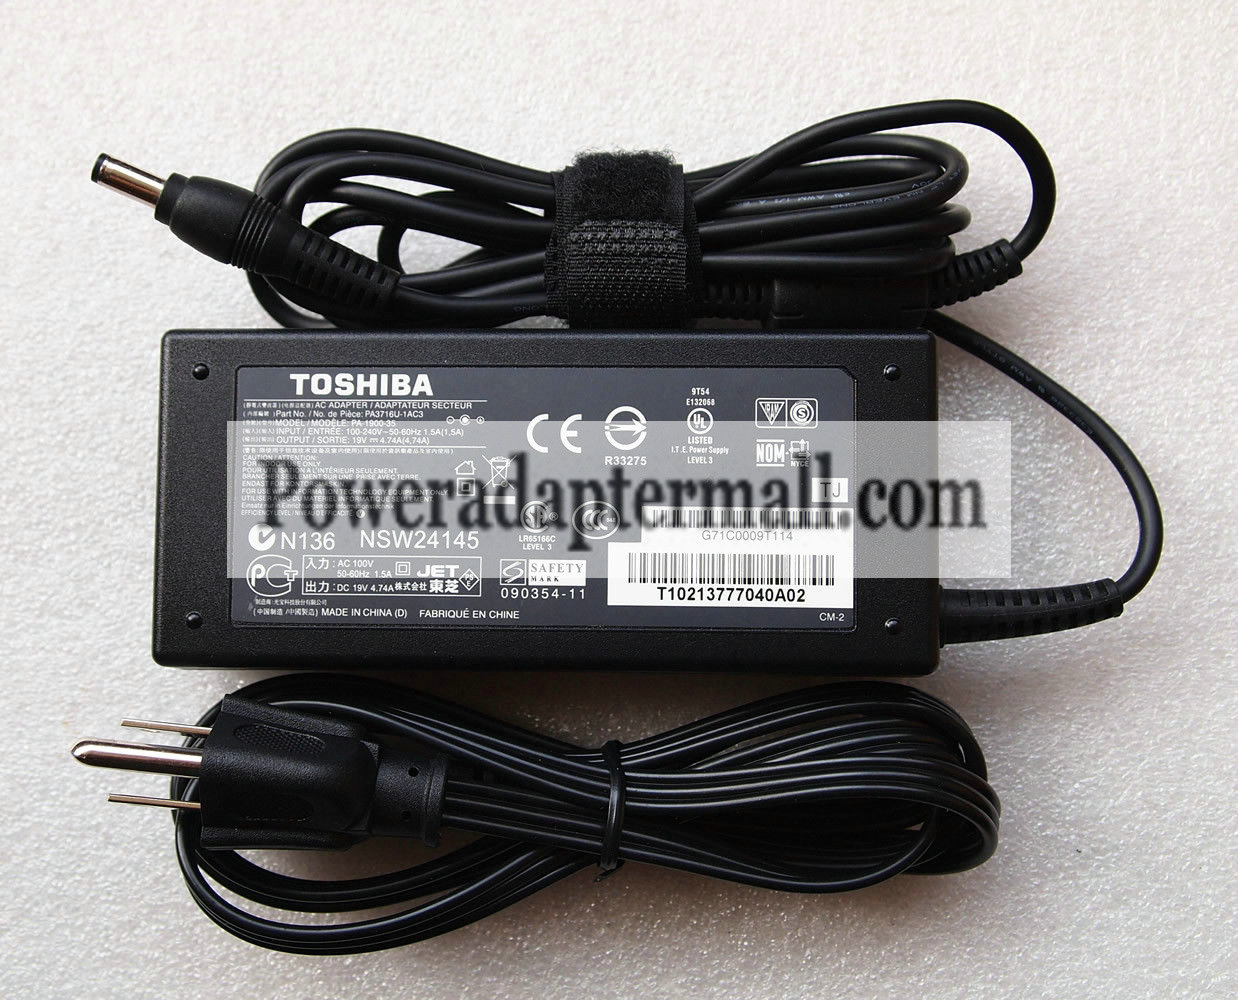 19V 4.74A 90W Toshiba Satellite 1000 PA-1500-02 AC Adapter